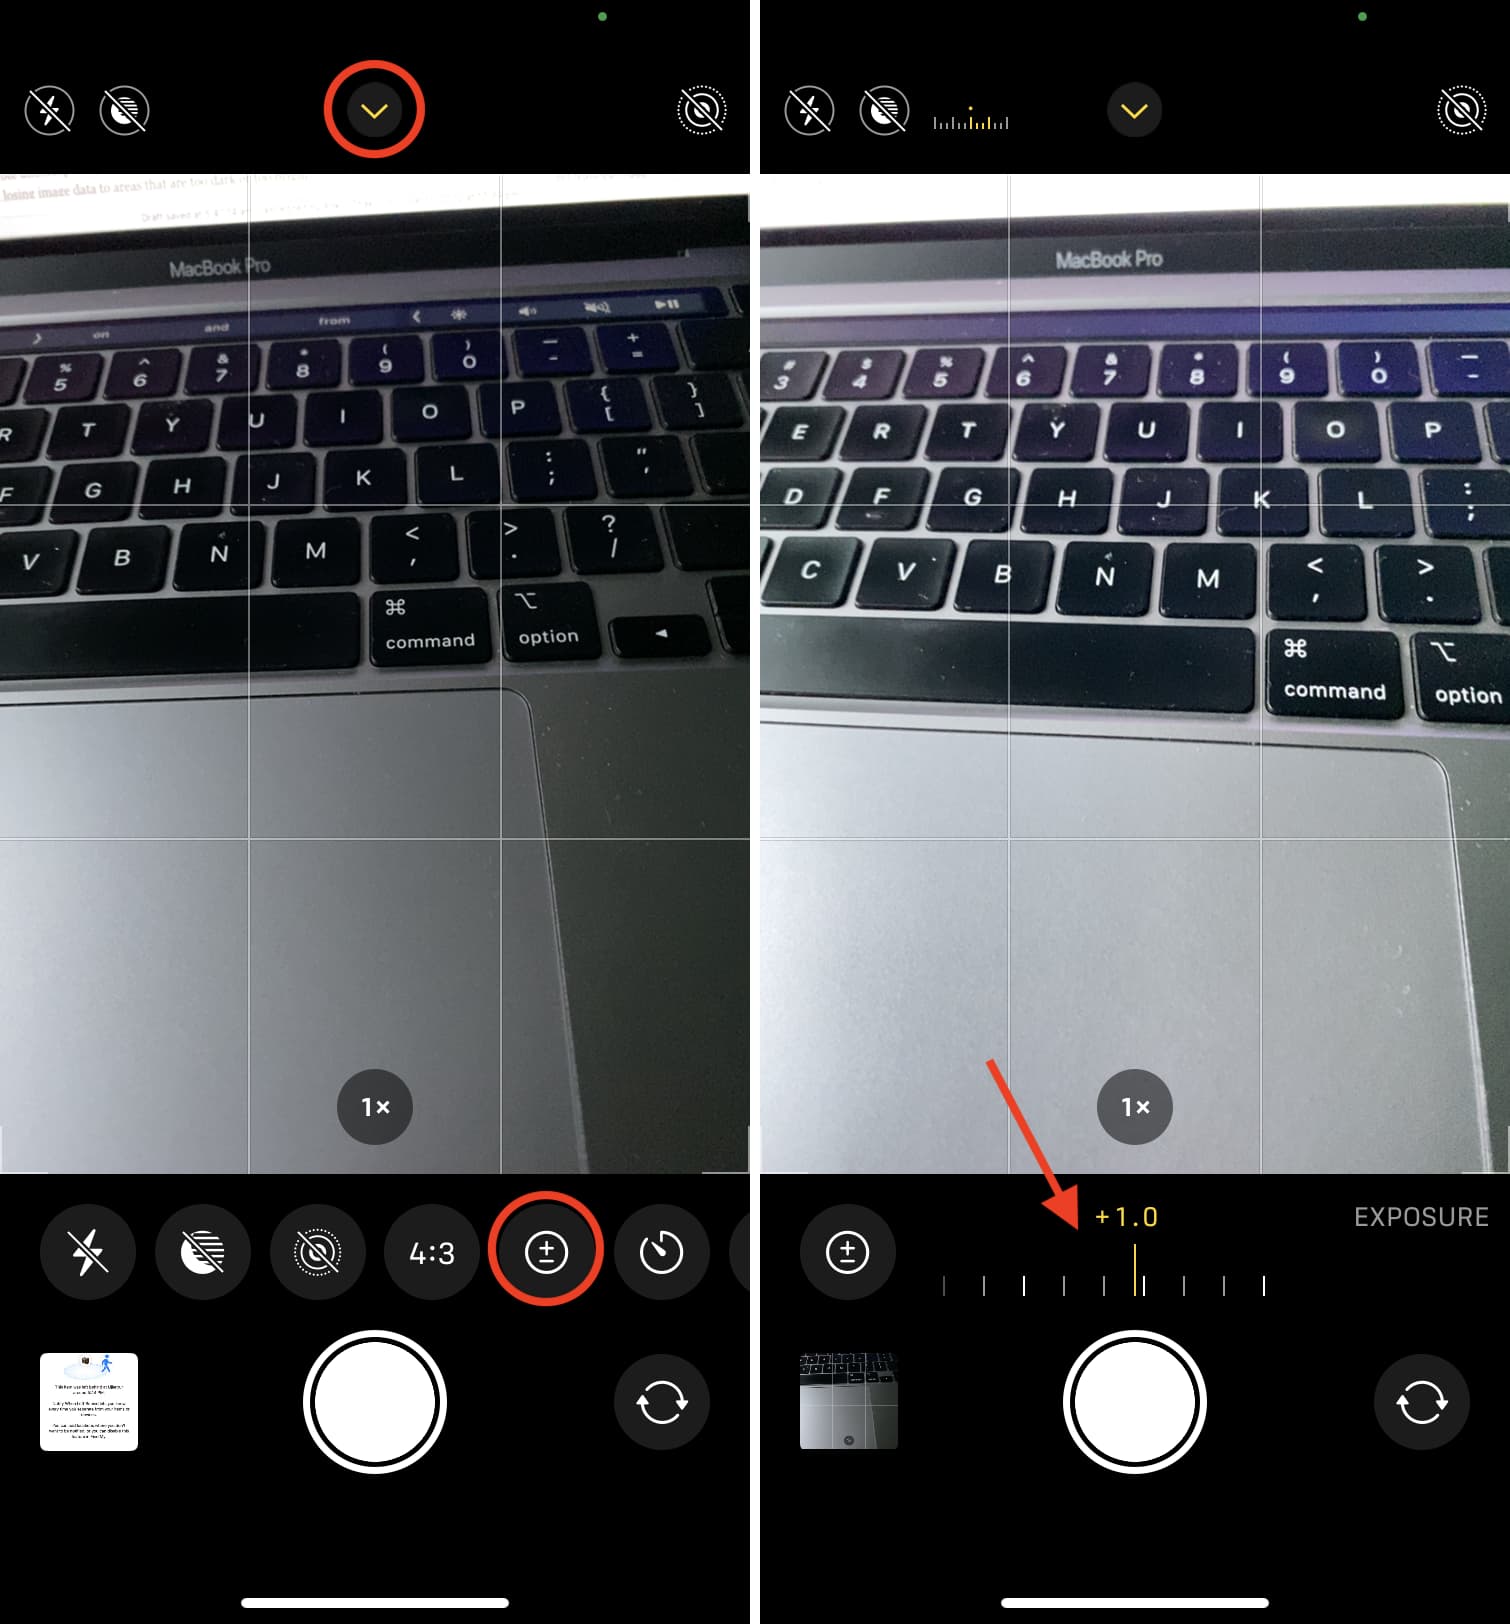 Exposure button in iPhone Camera app